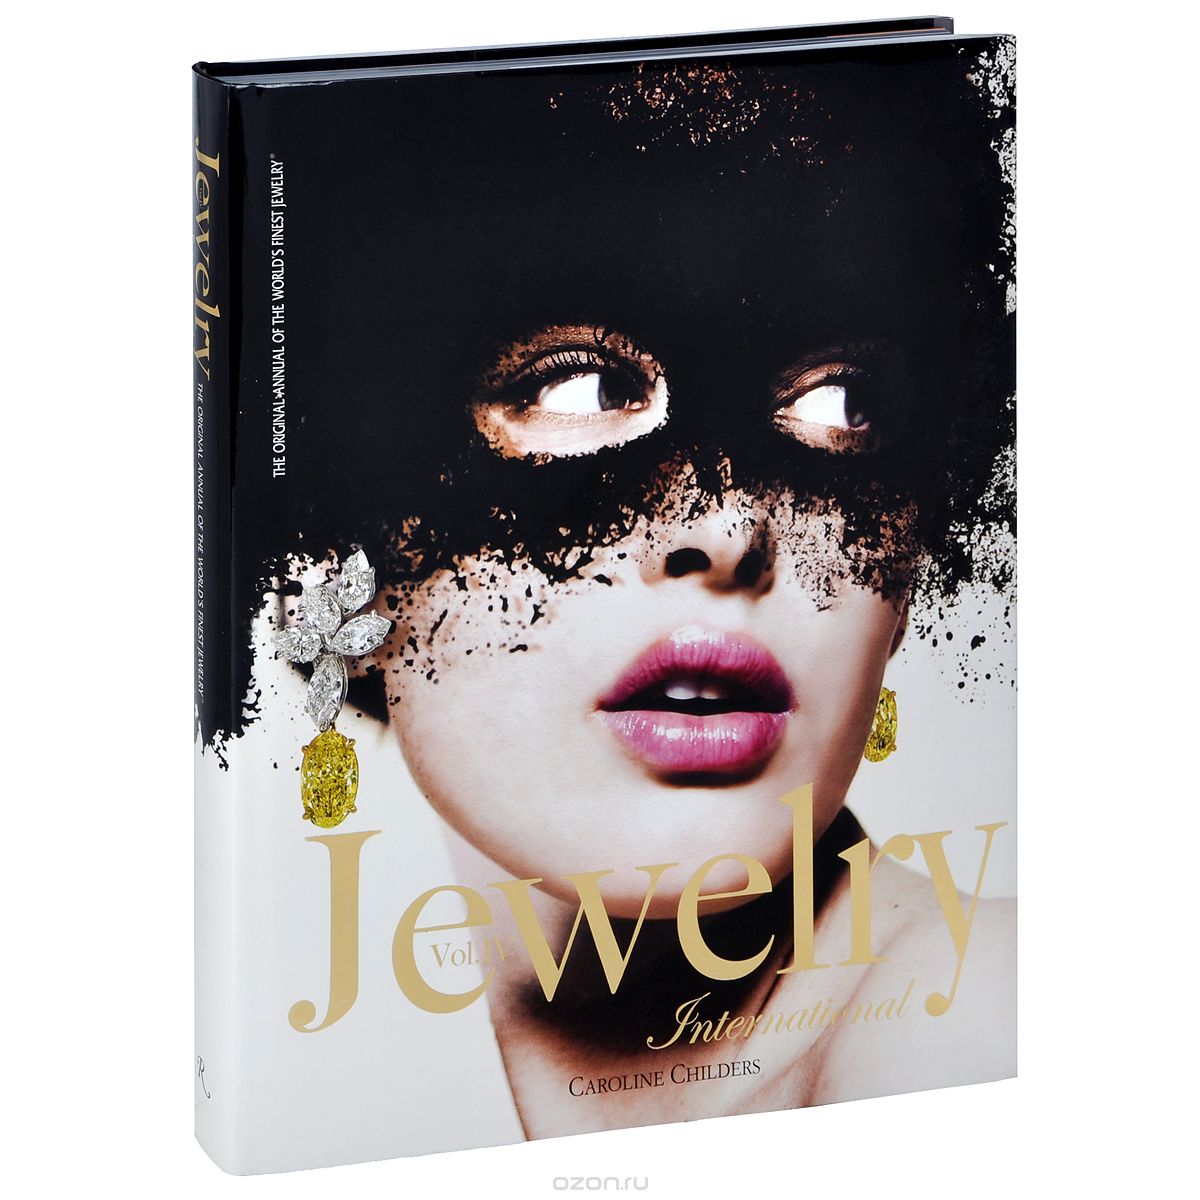 Jewelry International: Volume IV